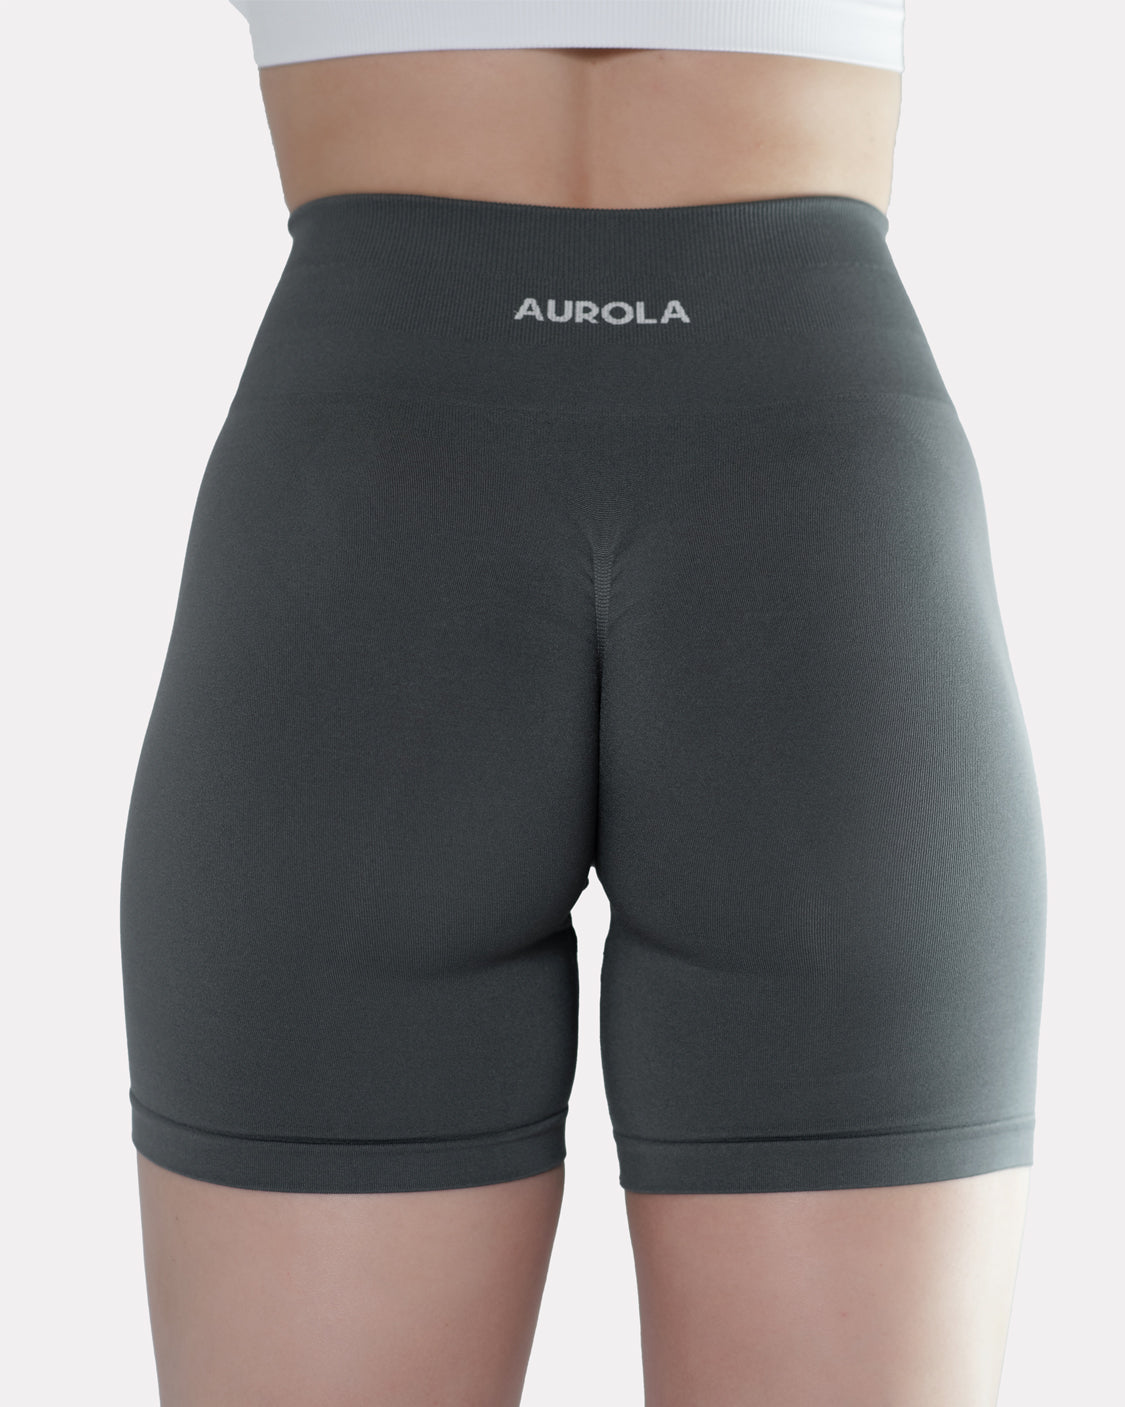 AUROLA Intensify 4.5'' Shorts-New Colors